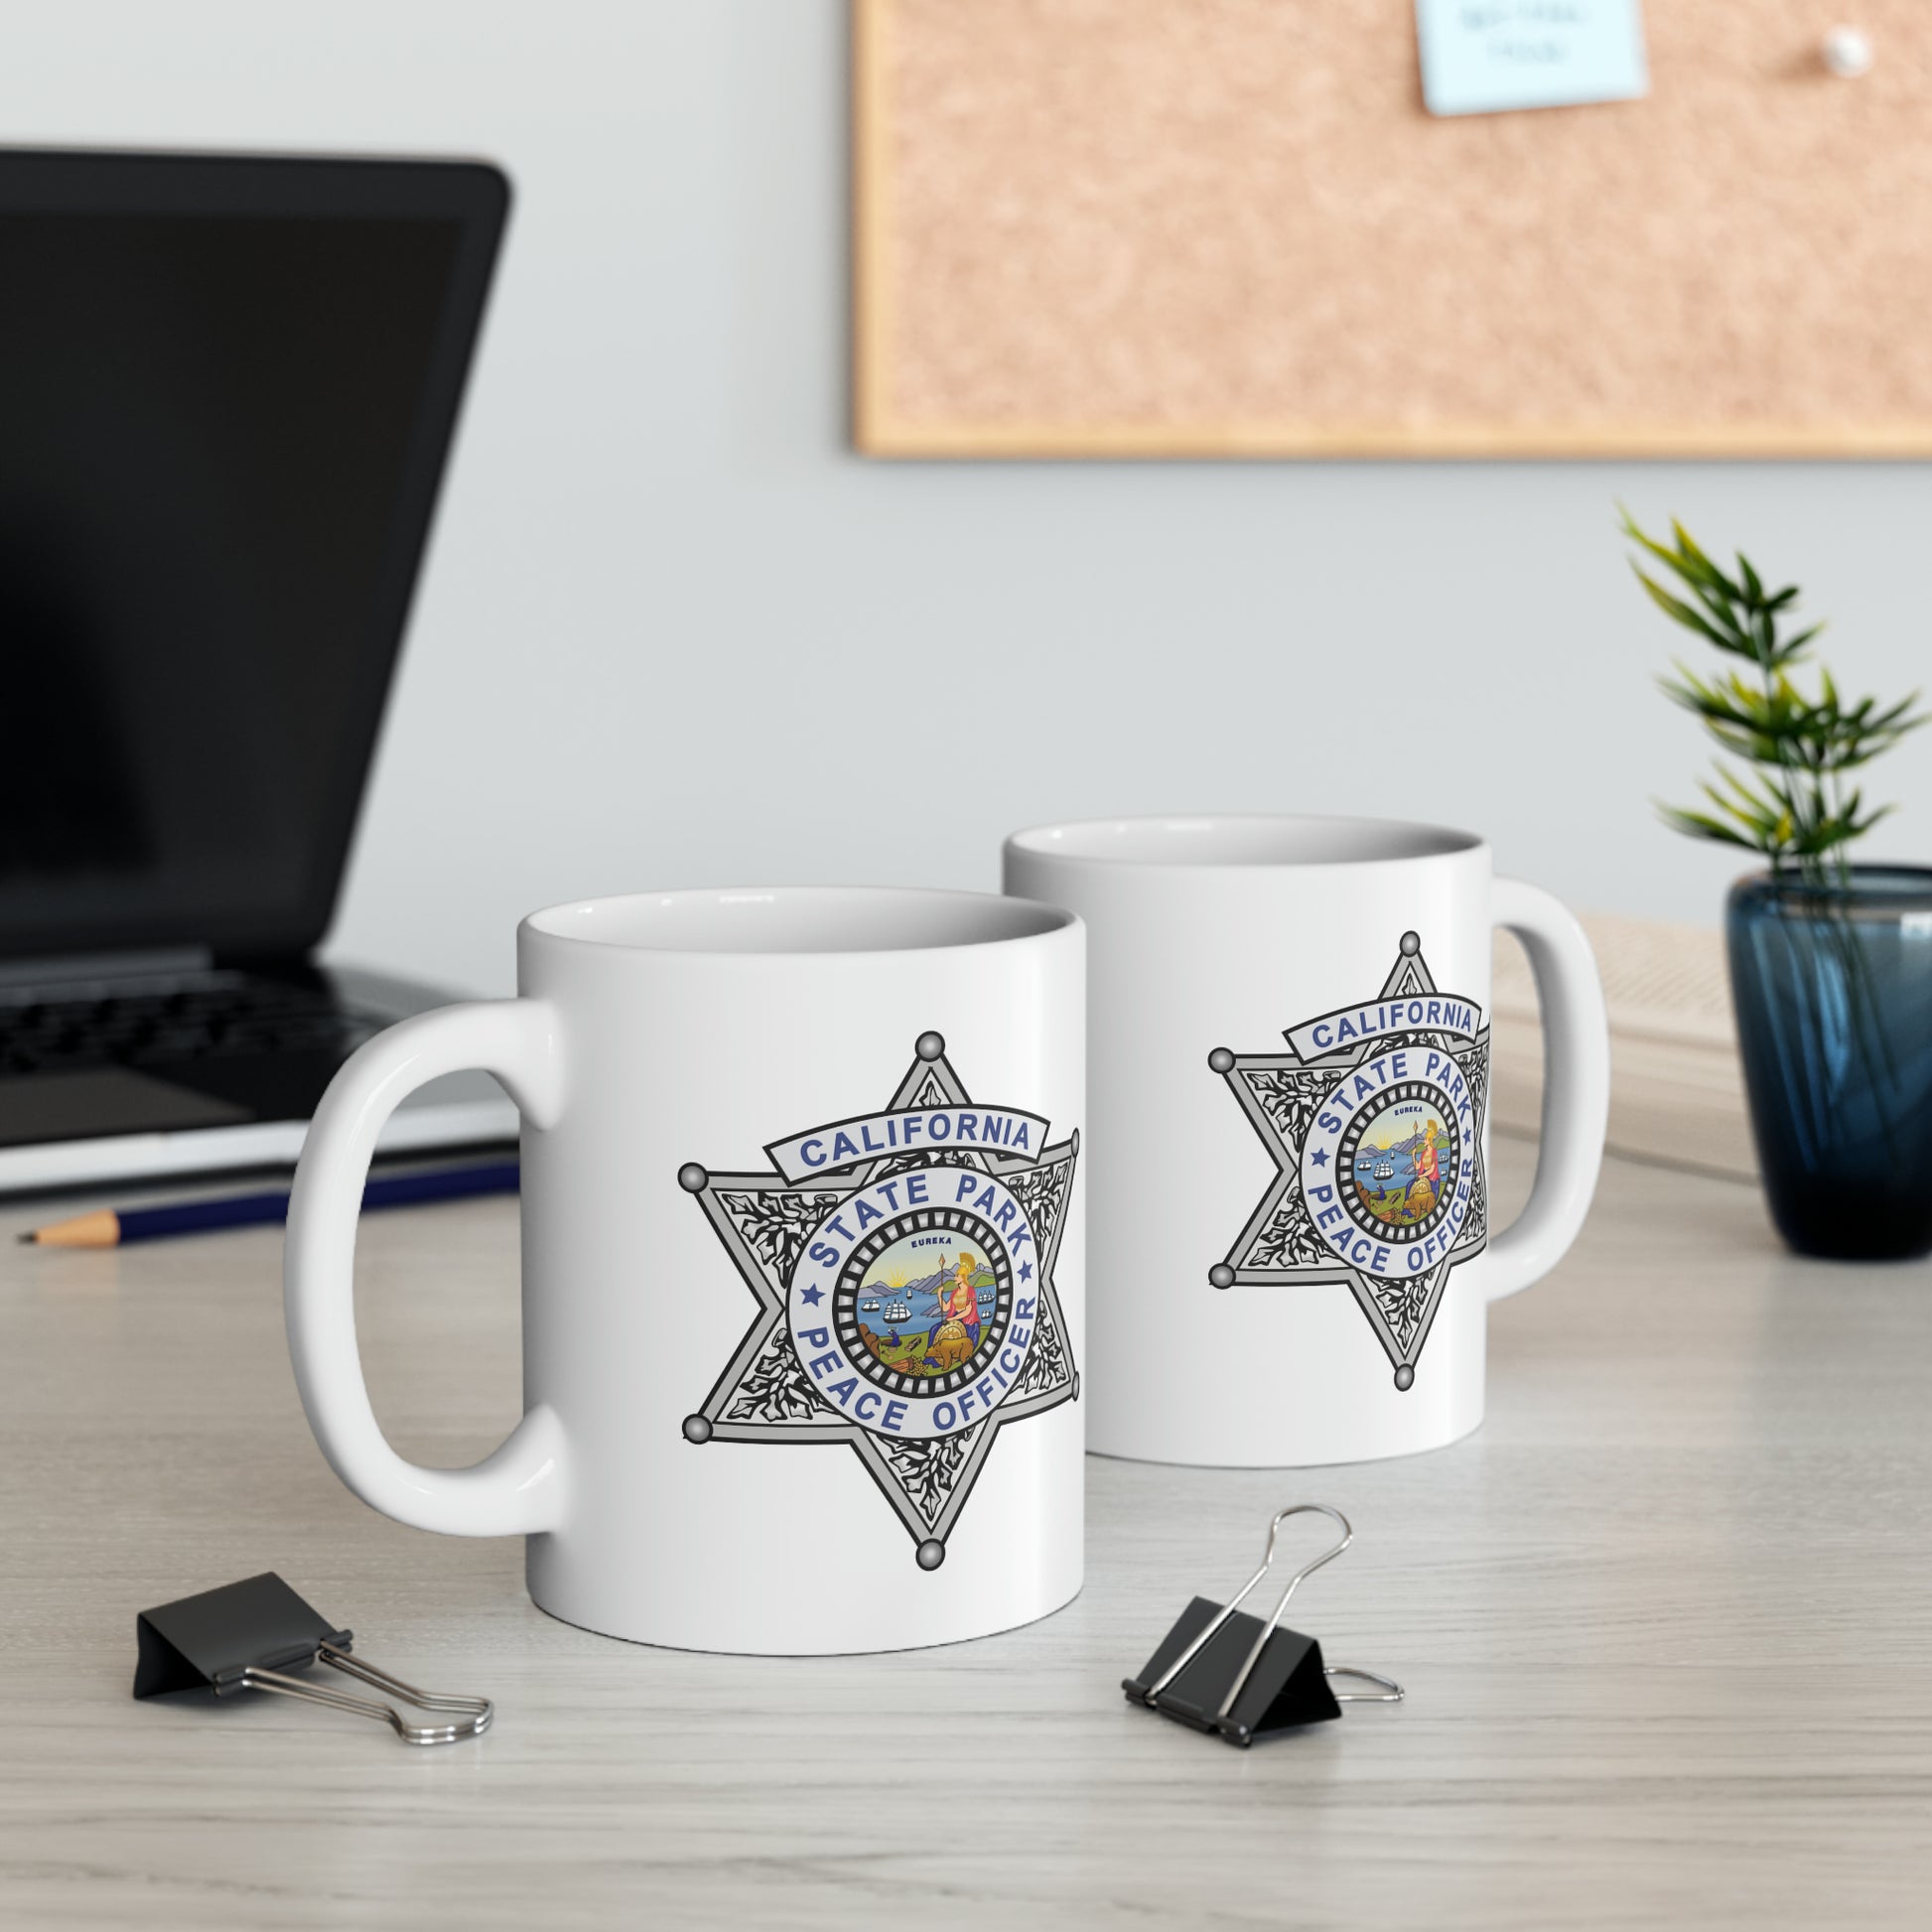 California State Parks Peace Officer Coffee Mug - Double Sided White Ceramic 11oz by TheGlassyLass.com